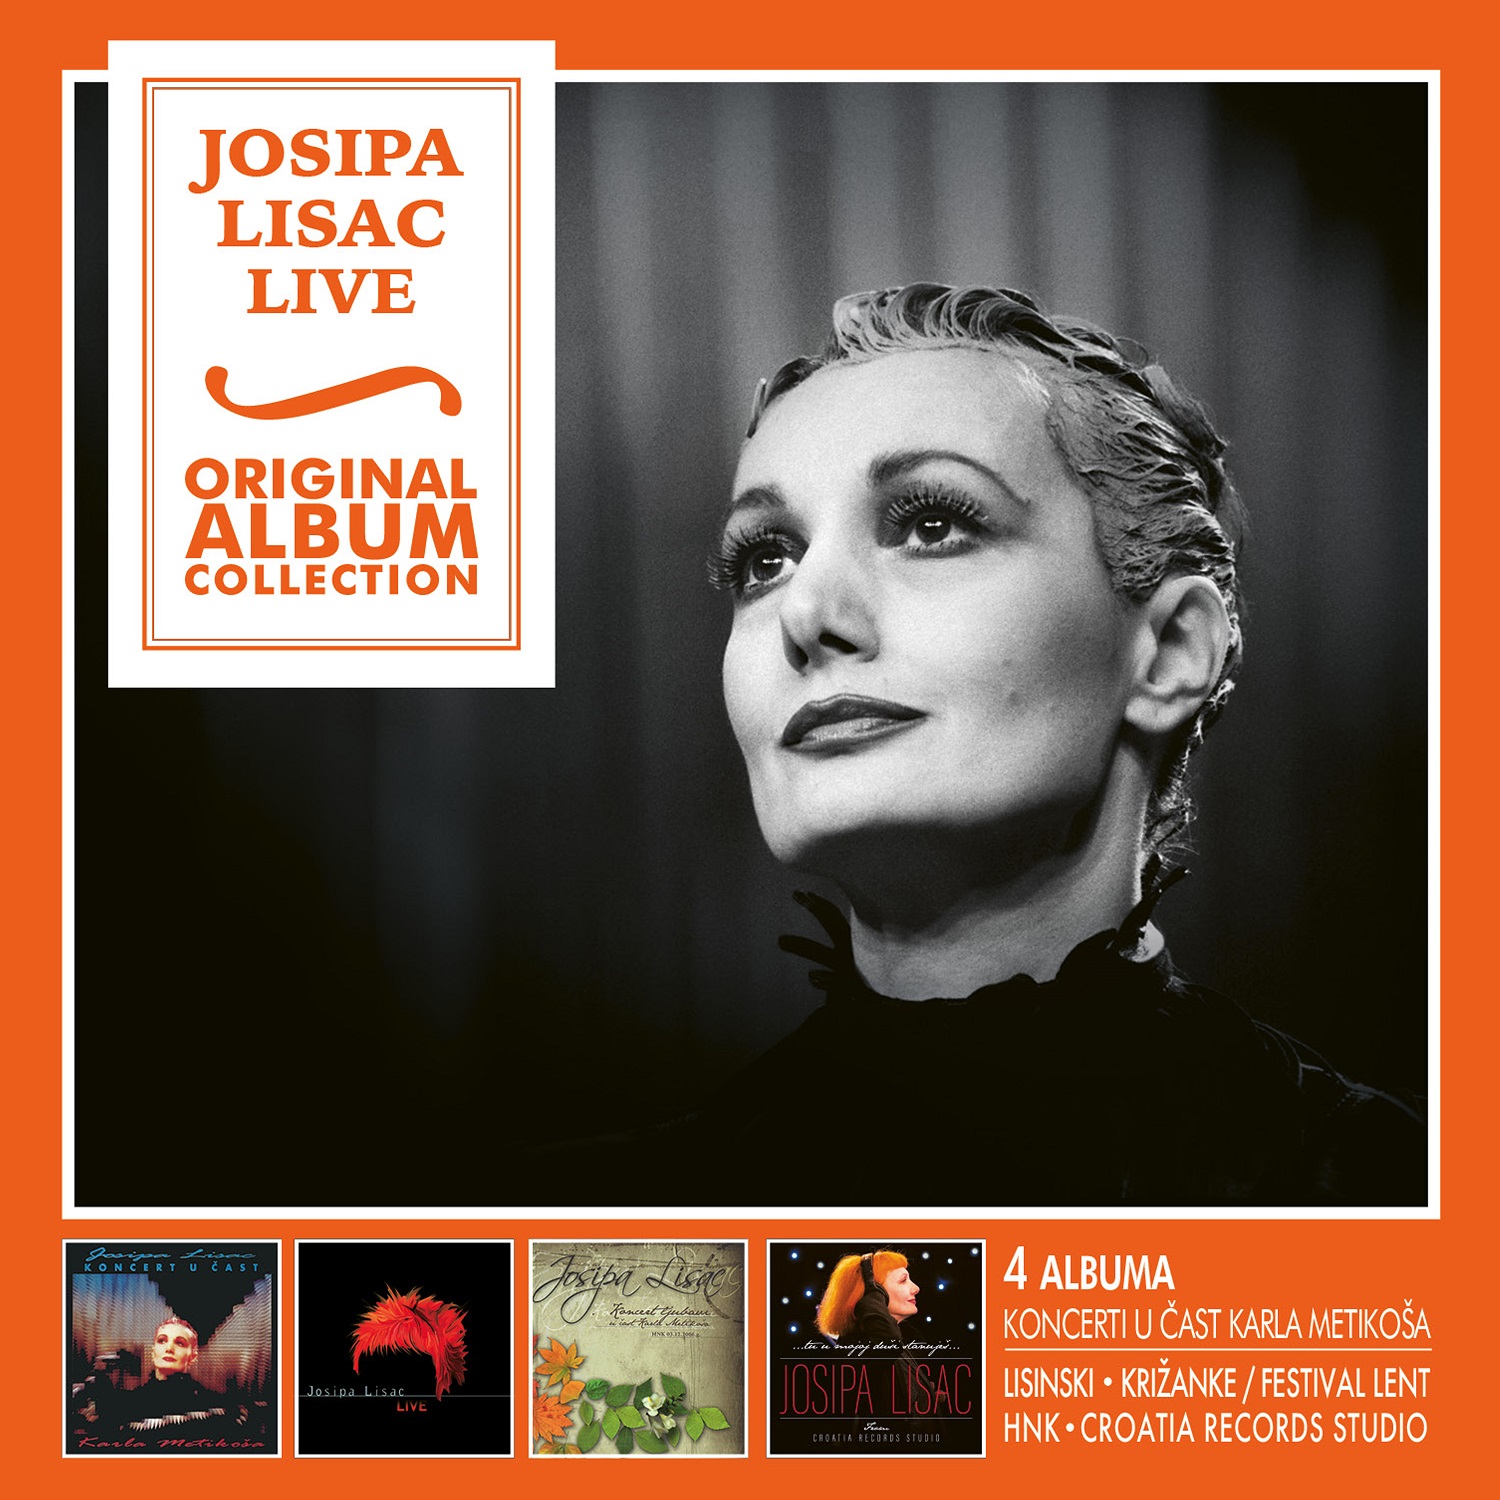 CD preporuka: “Original Album Collection, live” Josipe Lisac